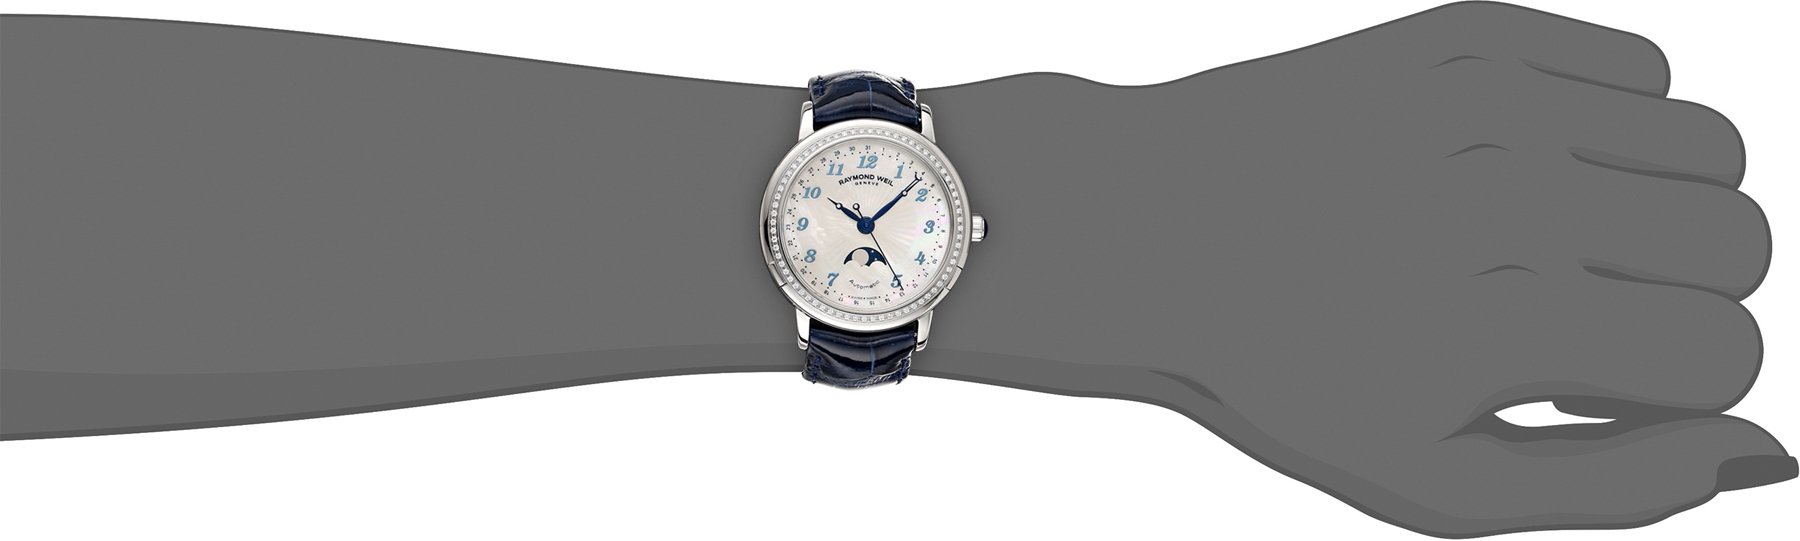 Raymond Weil Women's 2739-LS3-05909 Maestro Analog Display Swiss Automatic Blue Watch